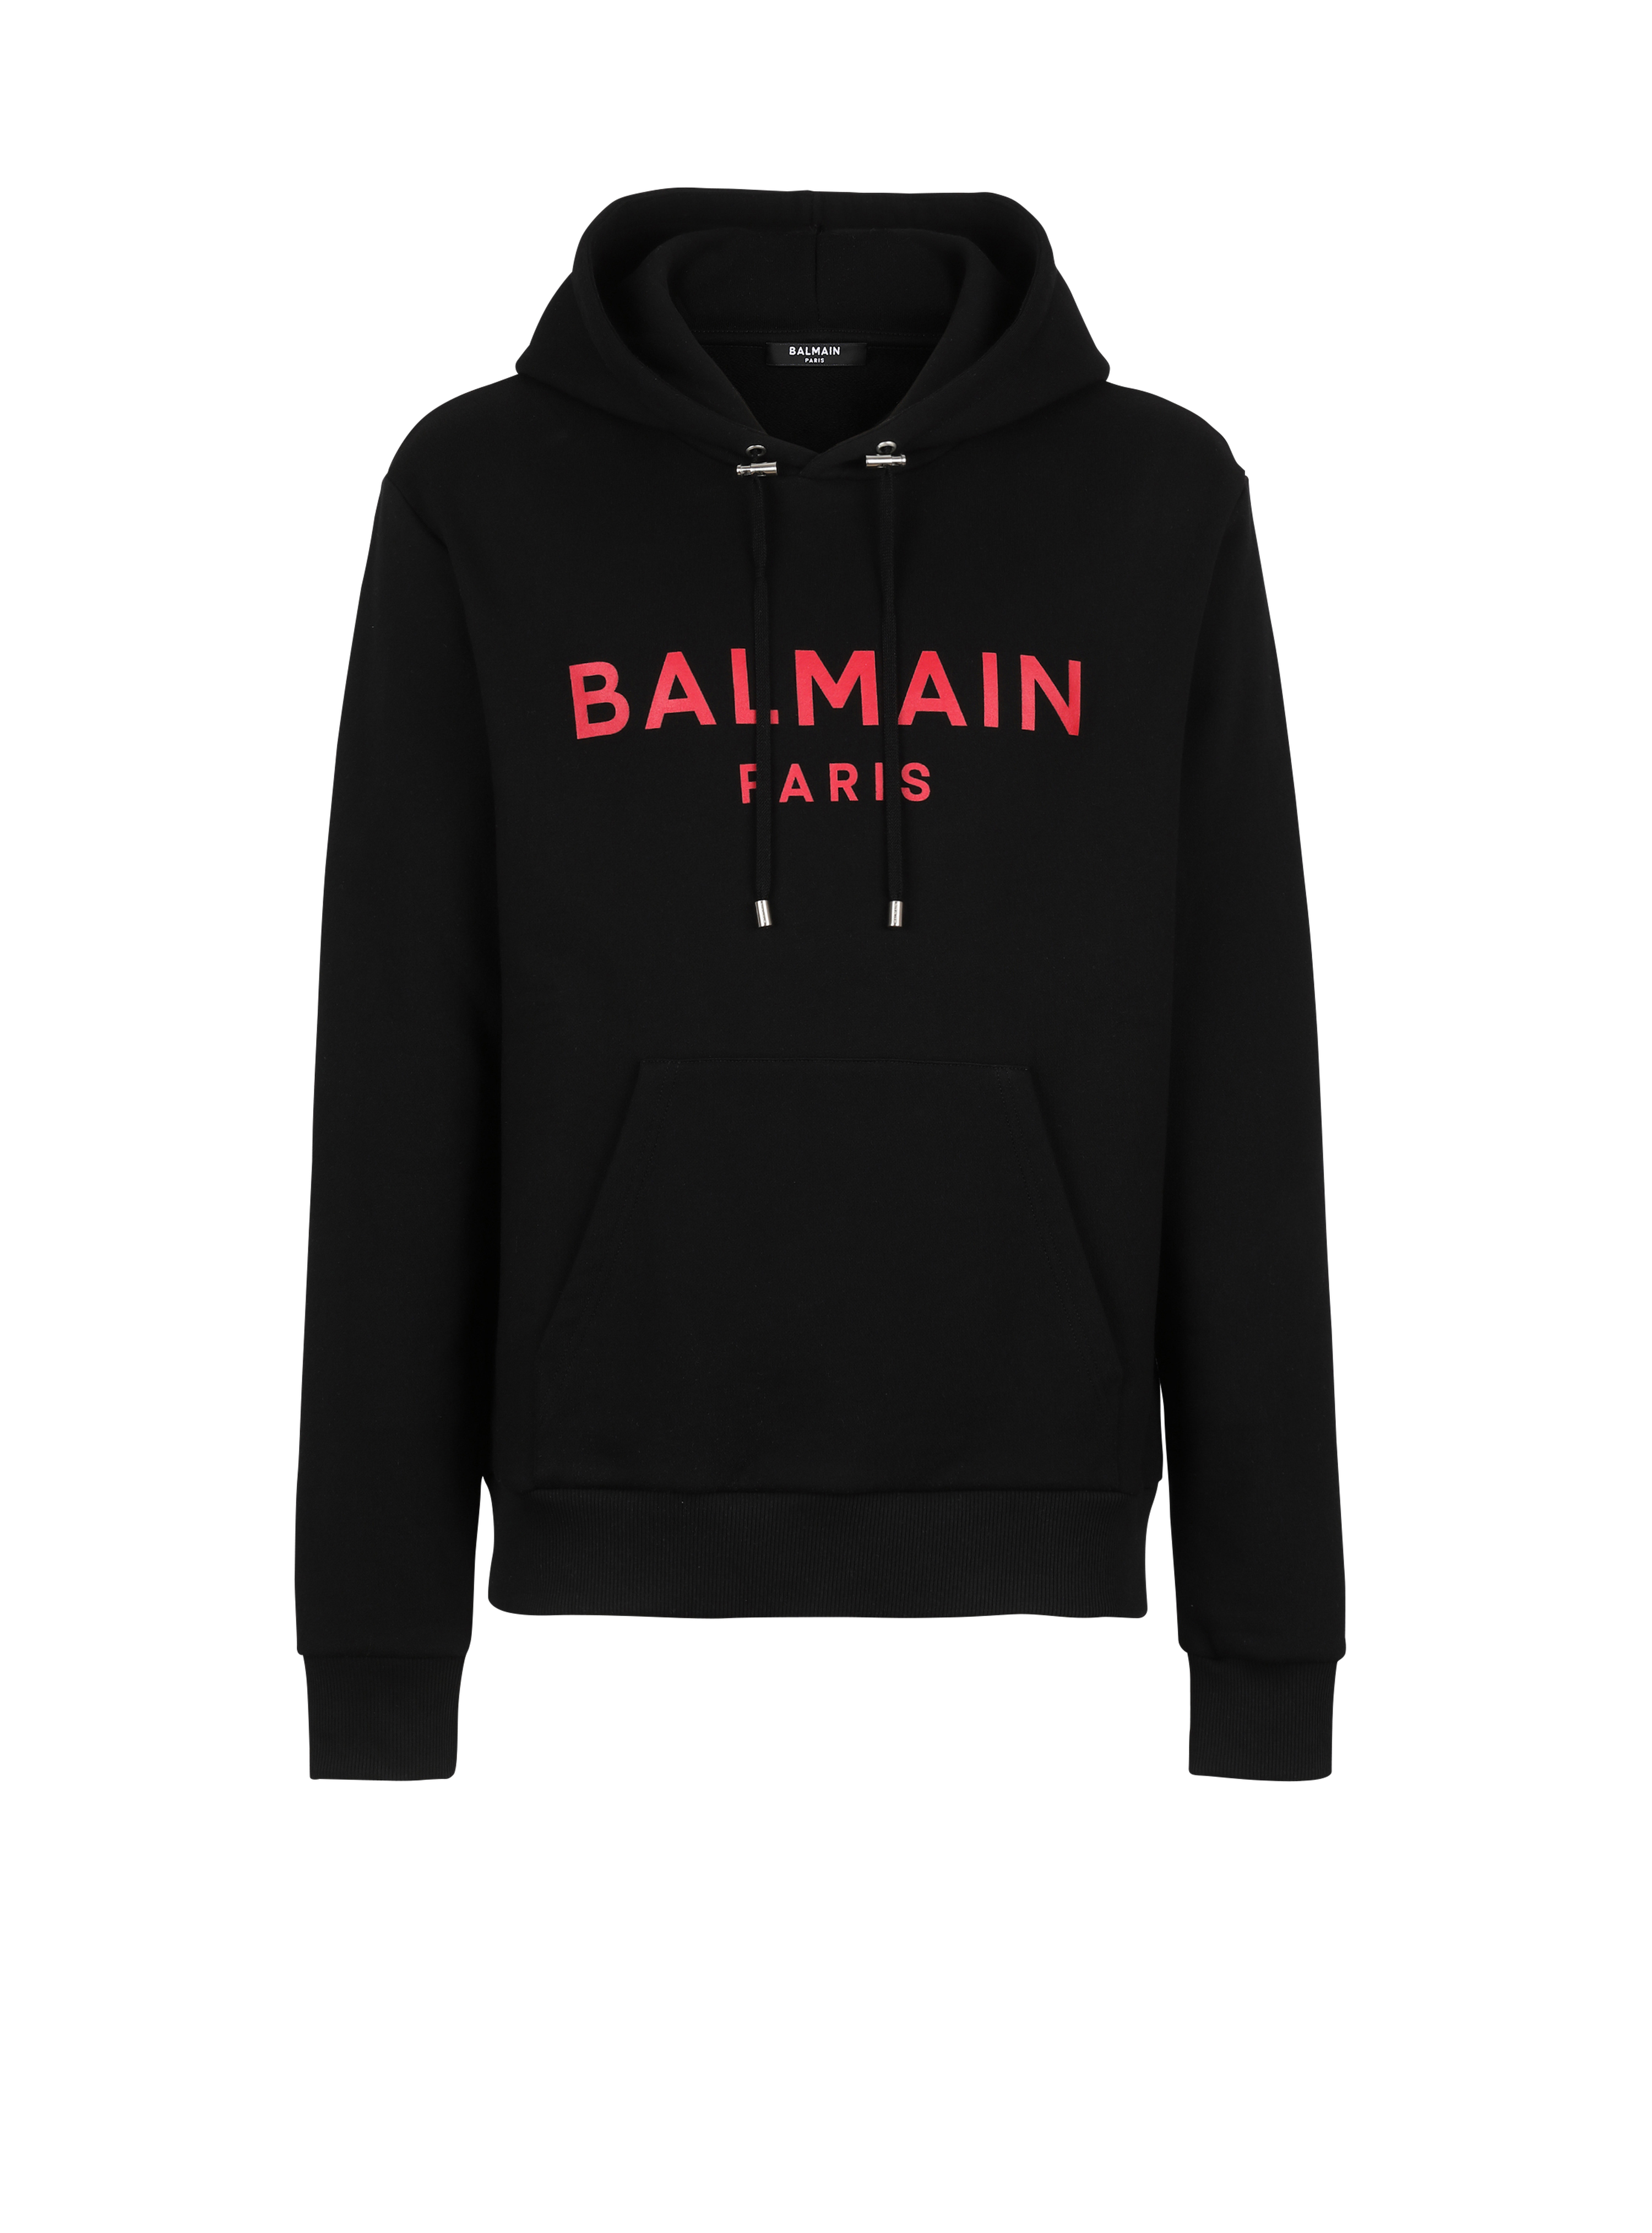 EXCLUSIVE - Cotton sweatshirt with Balmain Paris logo print, black, hi-res